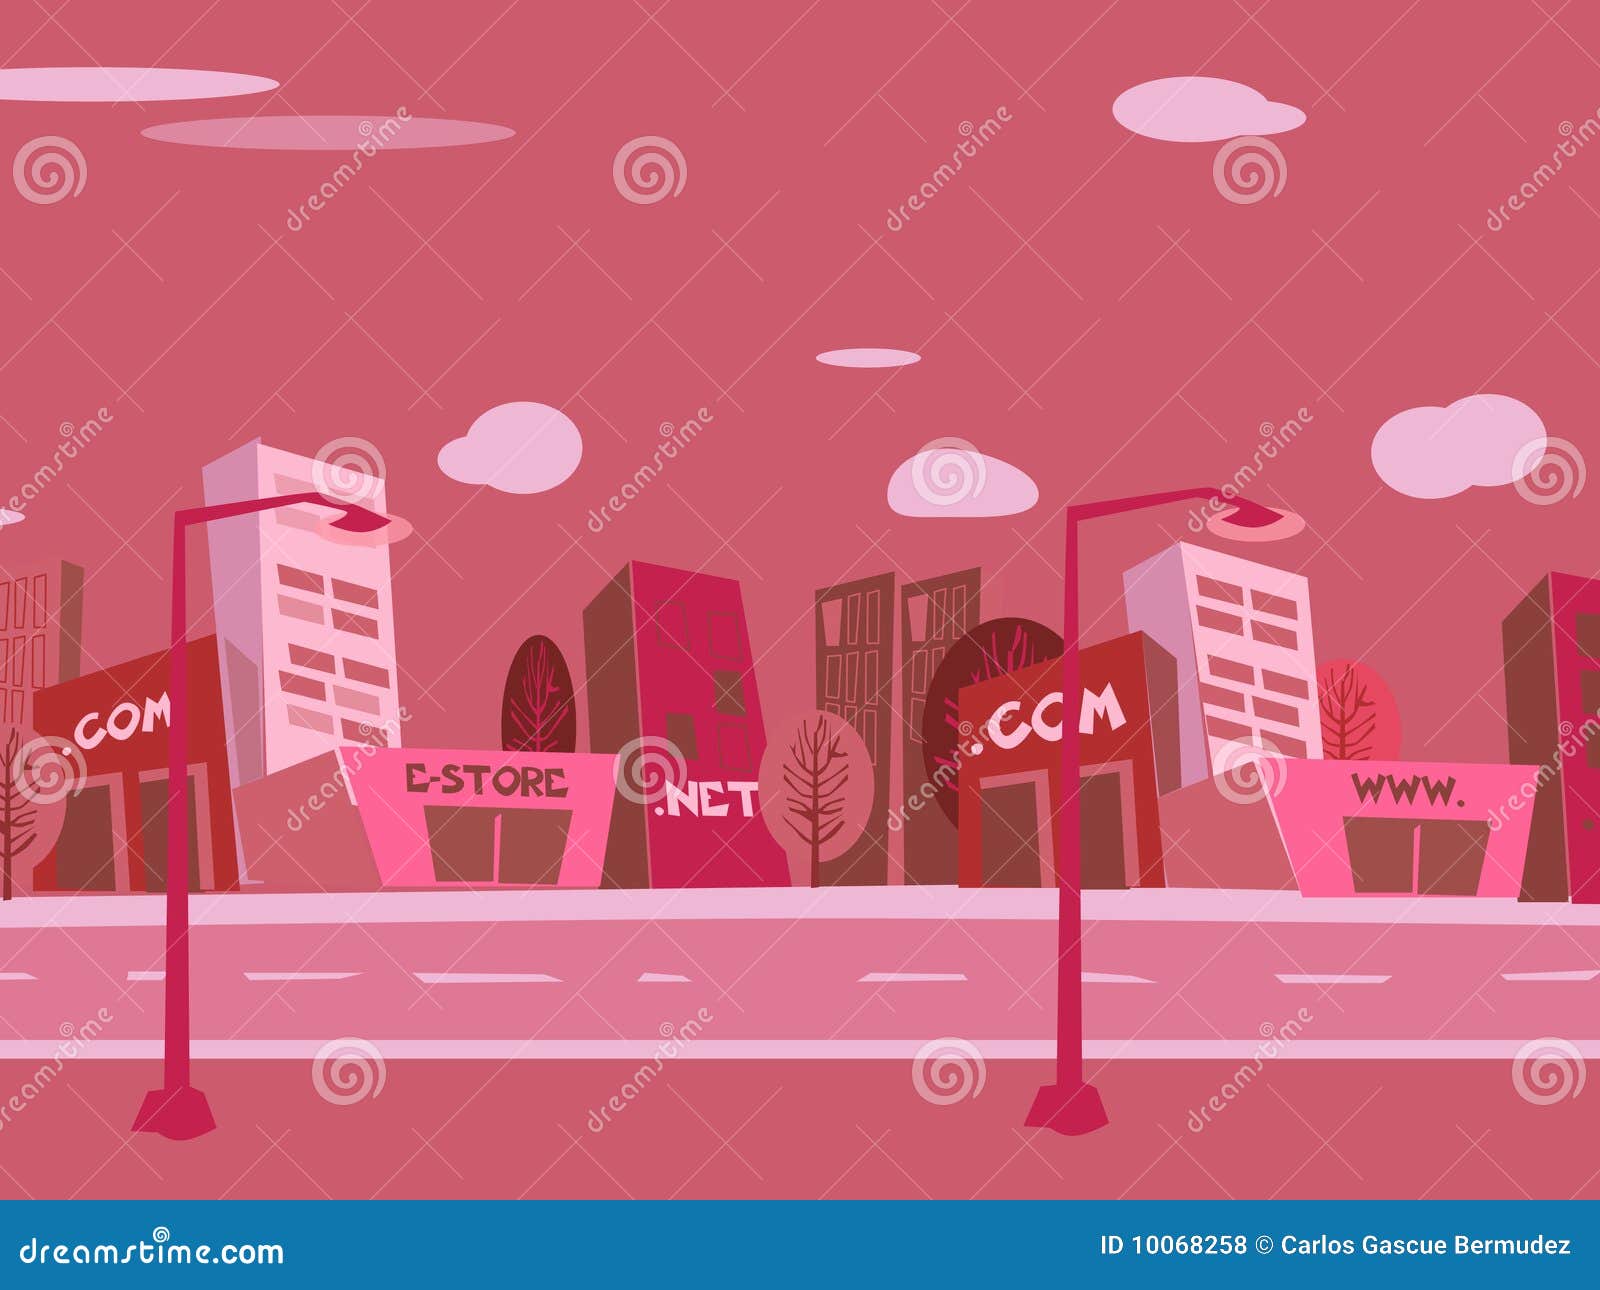 Cartoon city background stock vector. Illustration of cityscape - 10068258